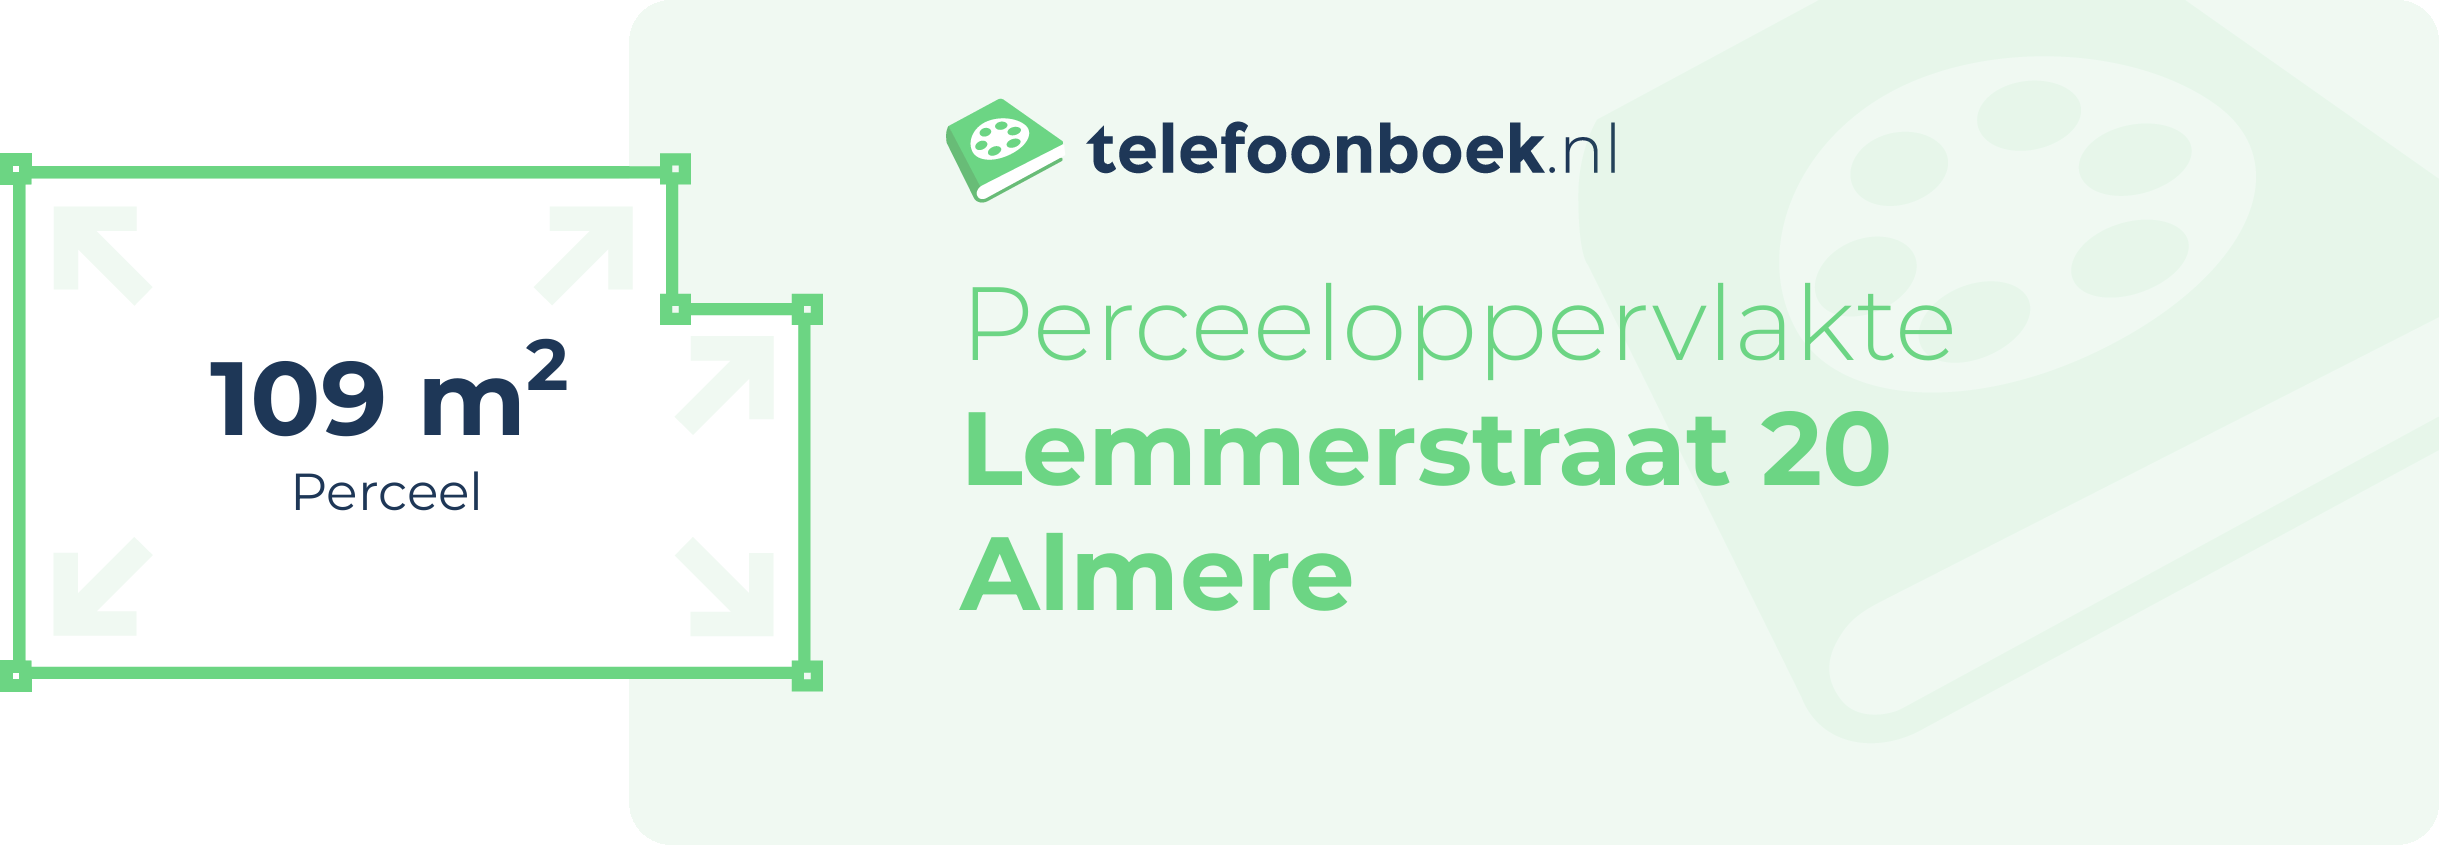 Perceeloppervlakte Lemmerstraat 20 Almere